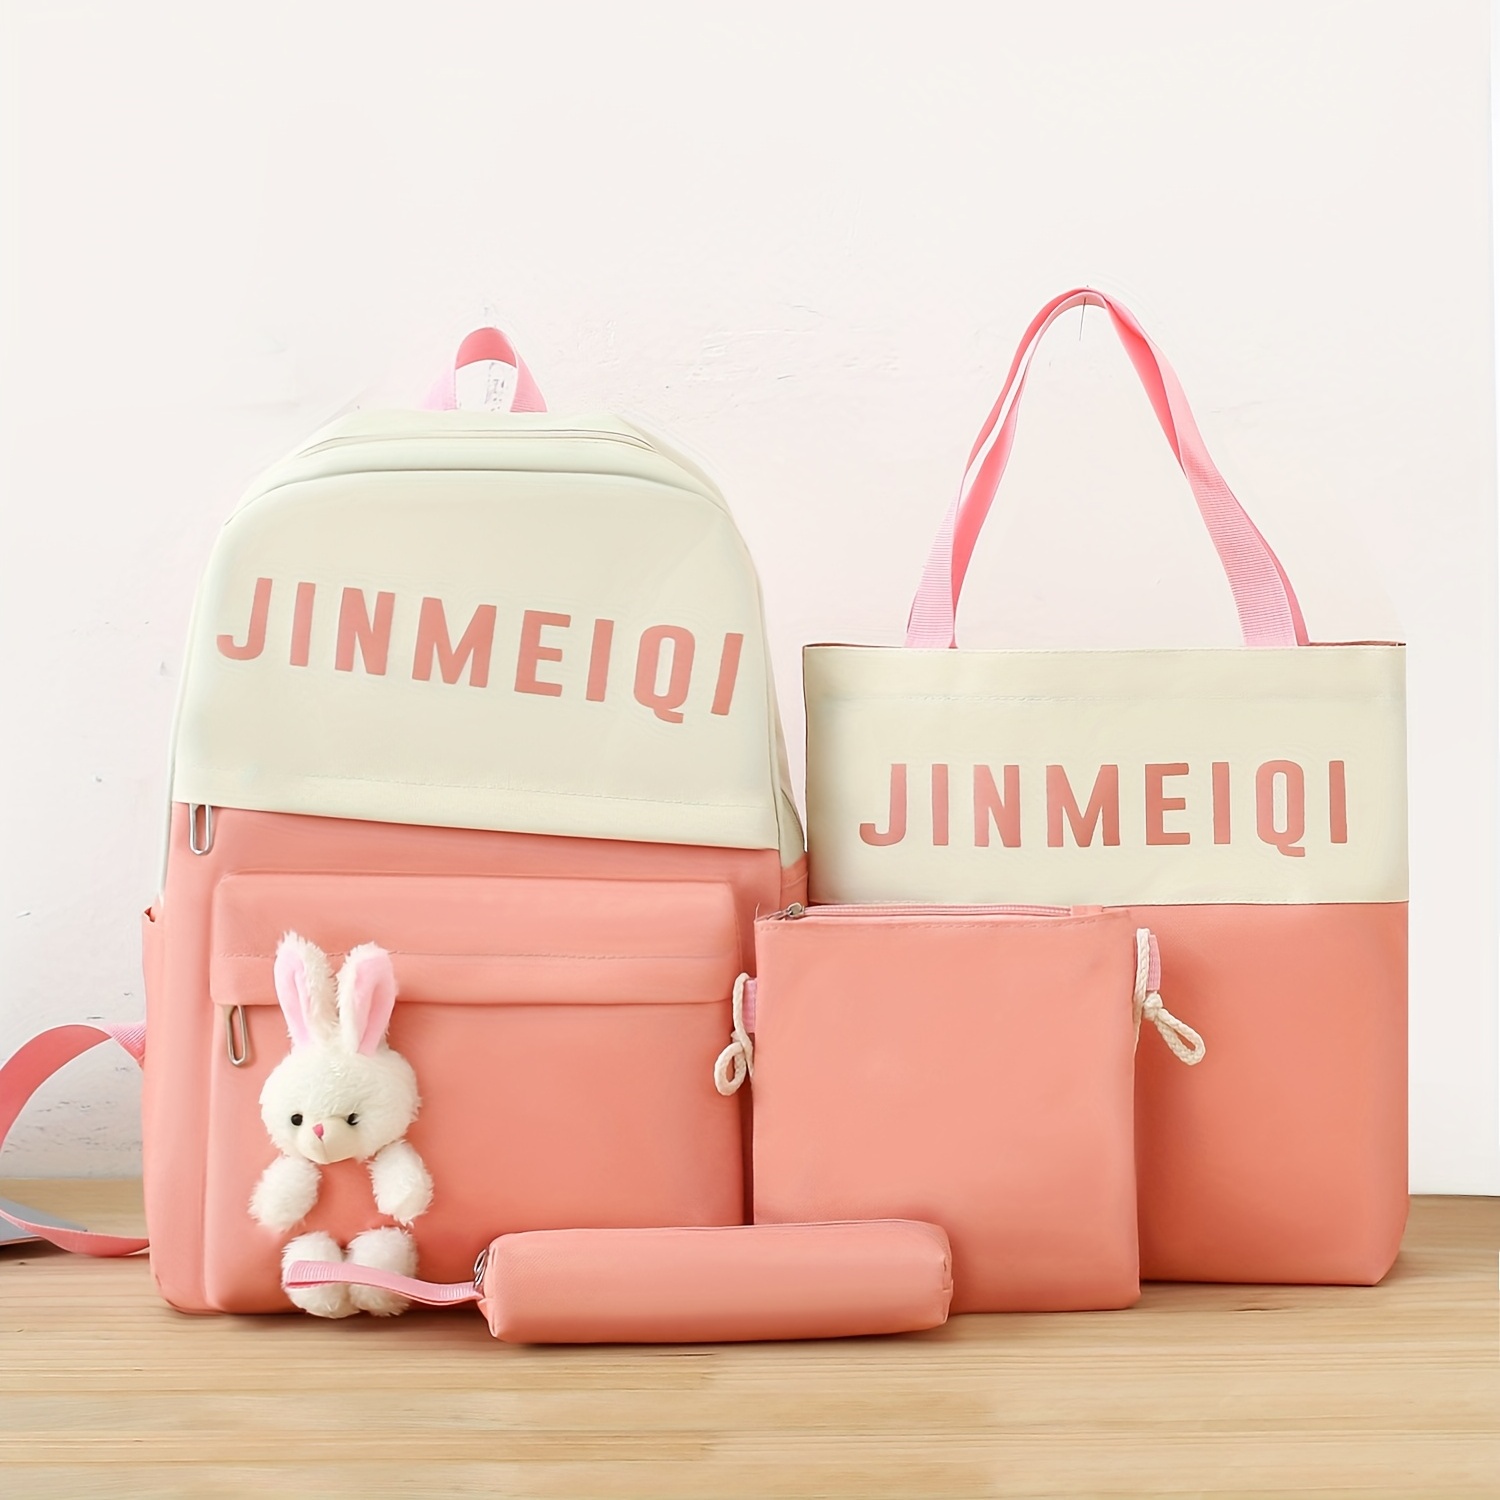 Backpack student school bag boy girl cute bag pendant Hello Kitty-9 designs